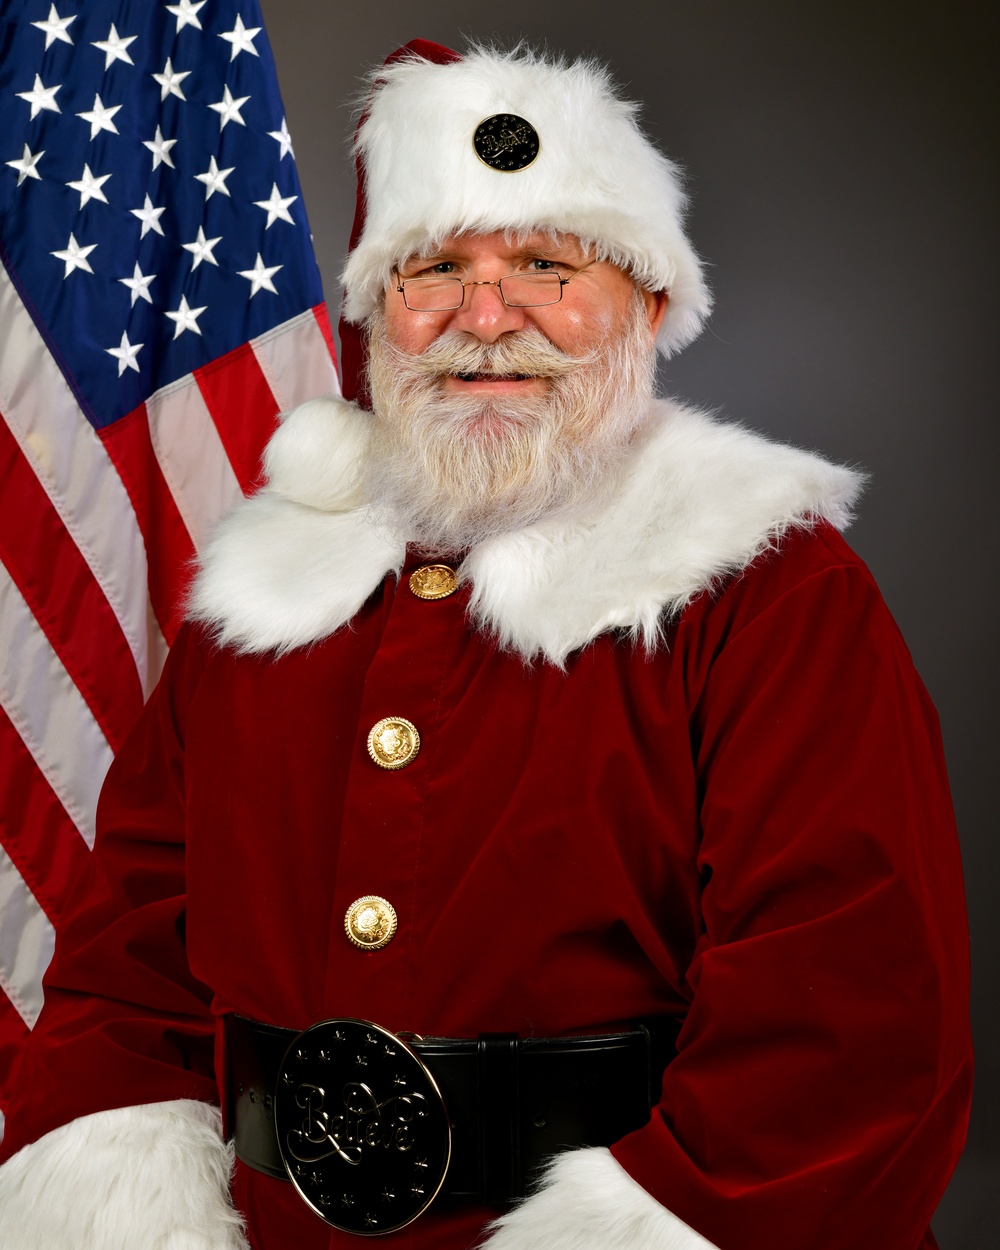 Mr. DeWayne Corbitt, 169th Fighter Wing Santa Claus